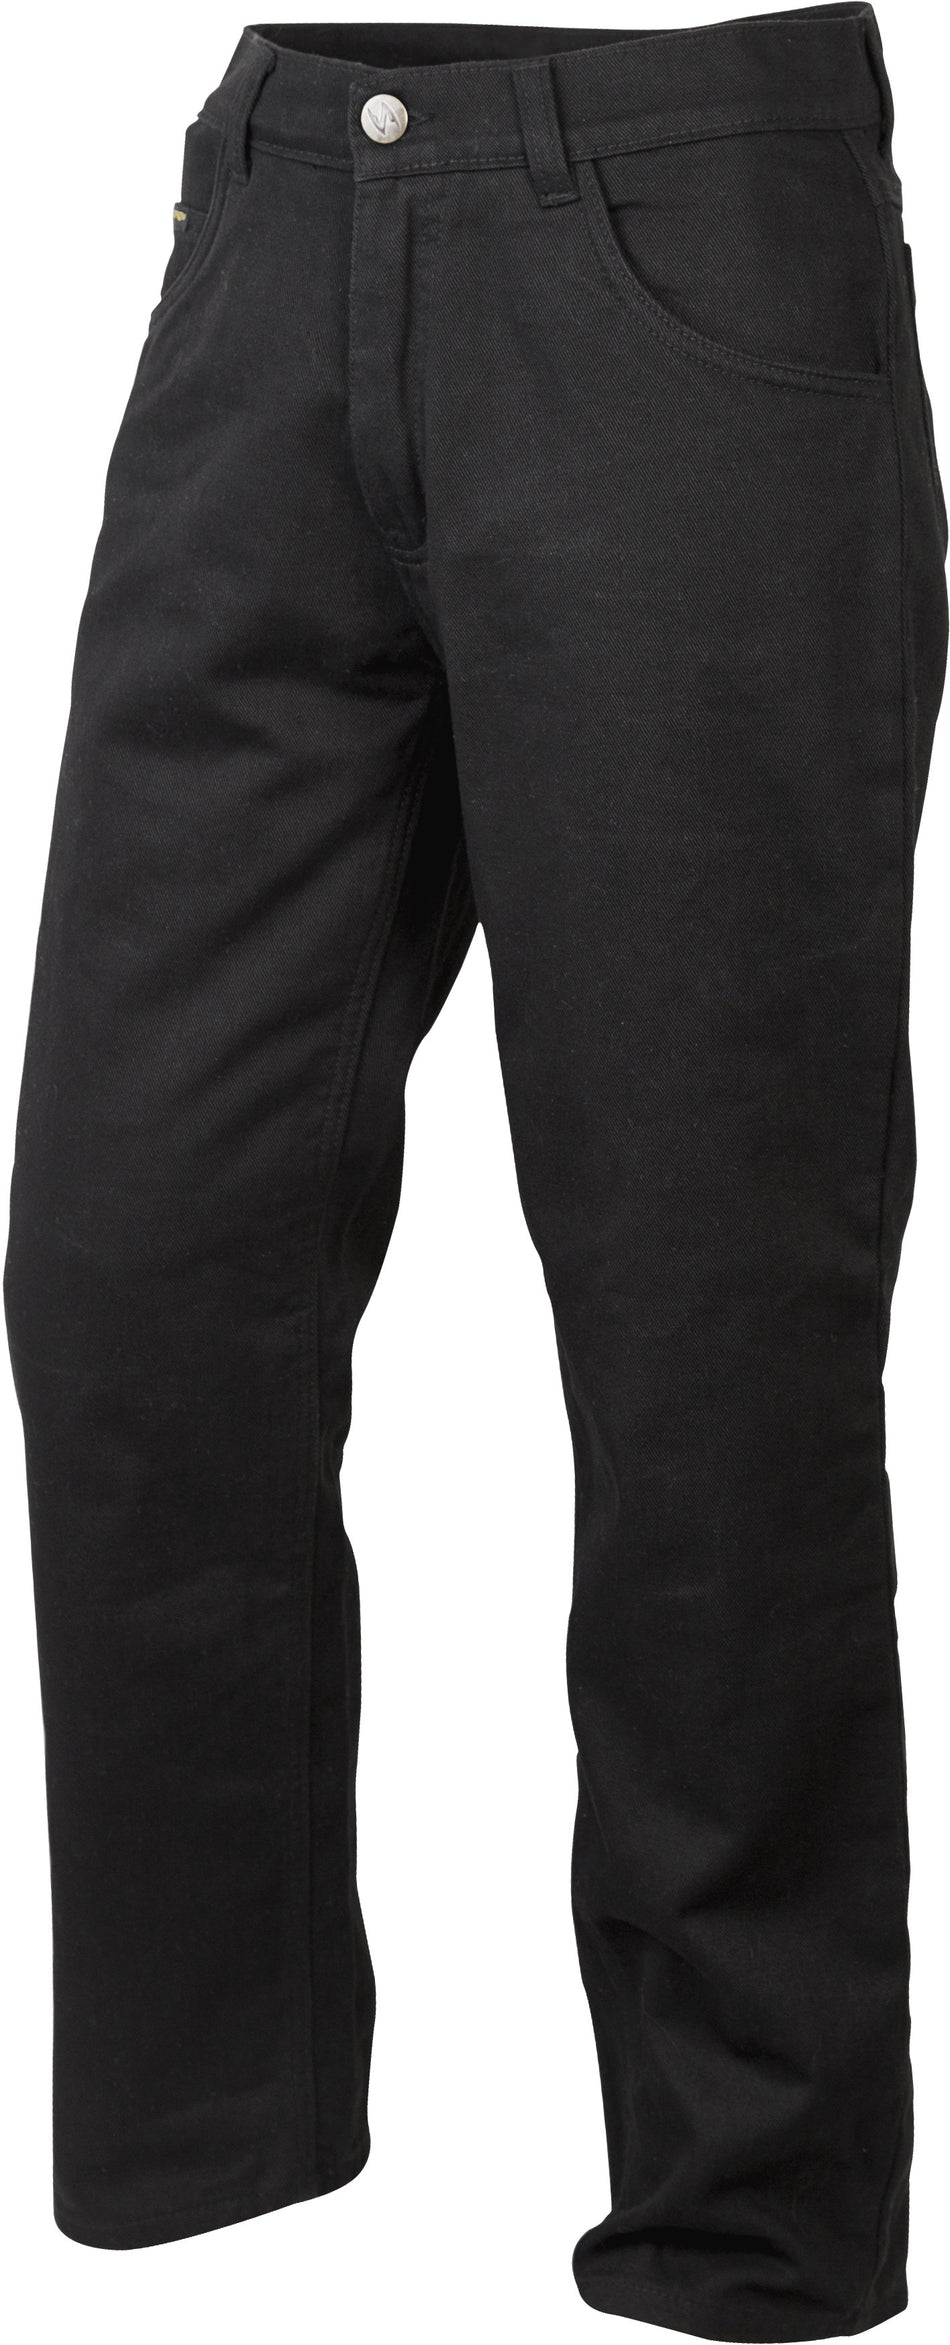 SCORPION EXO Covert Jeans Black Size 30 2503-30